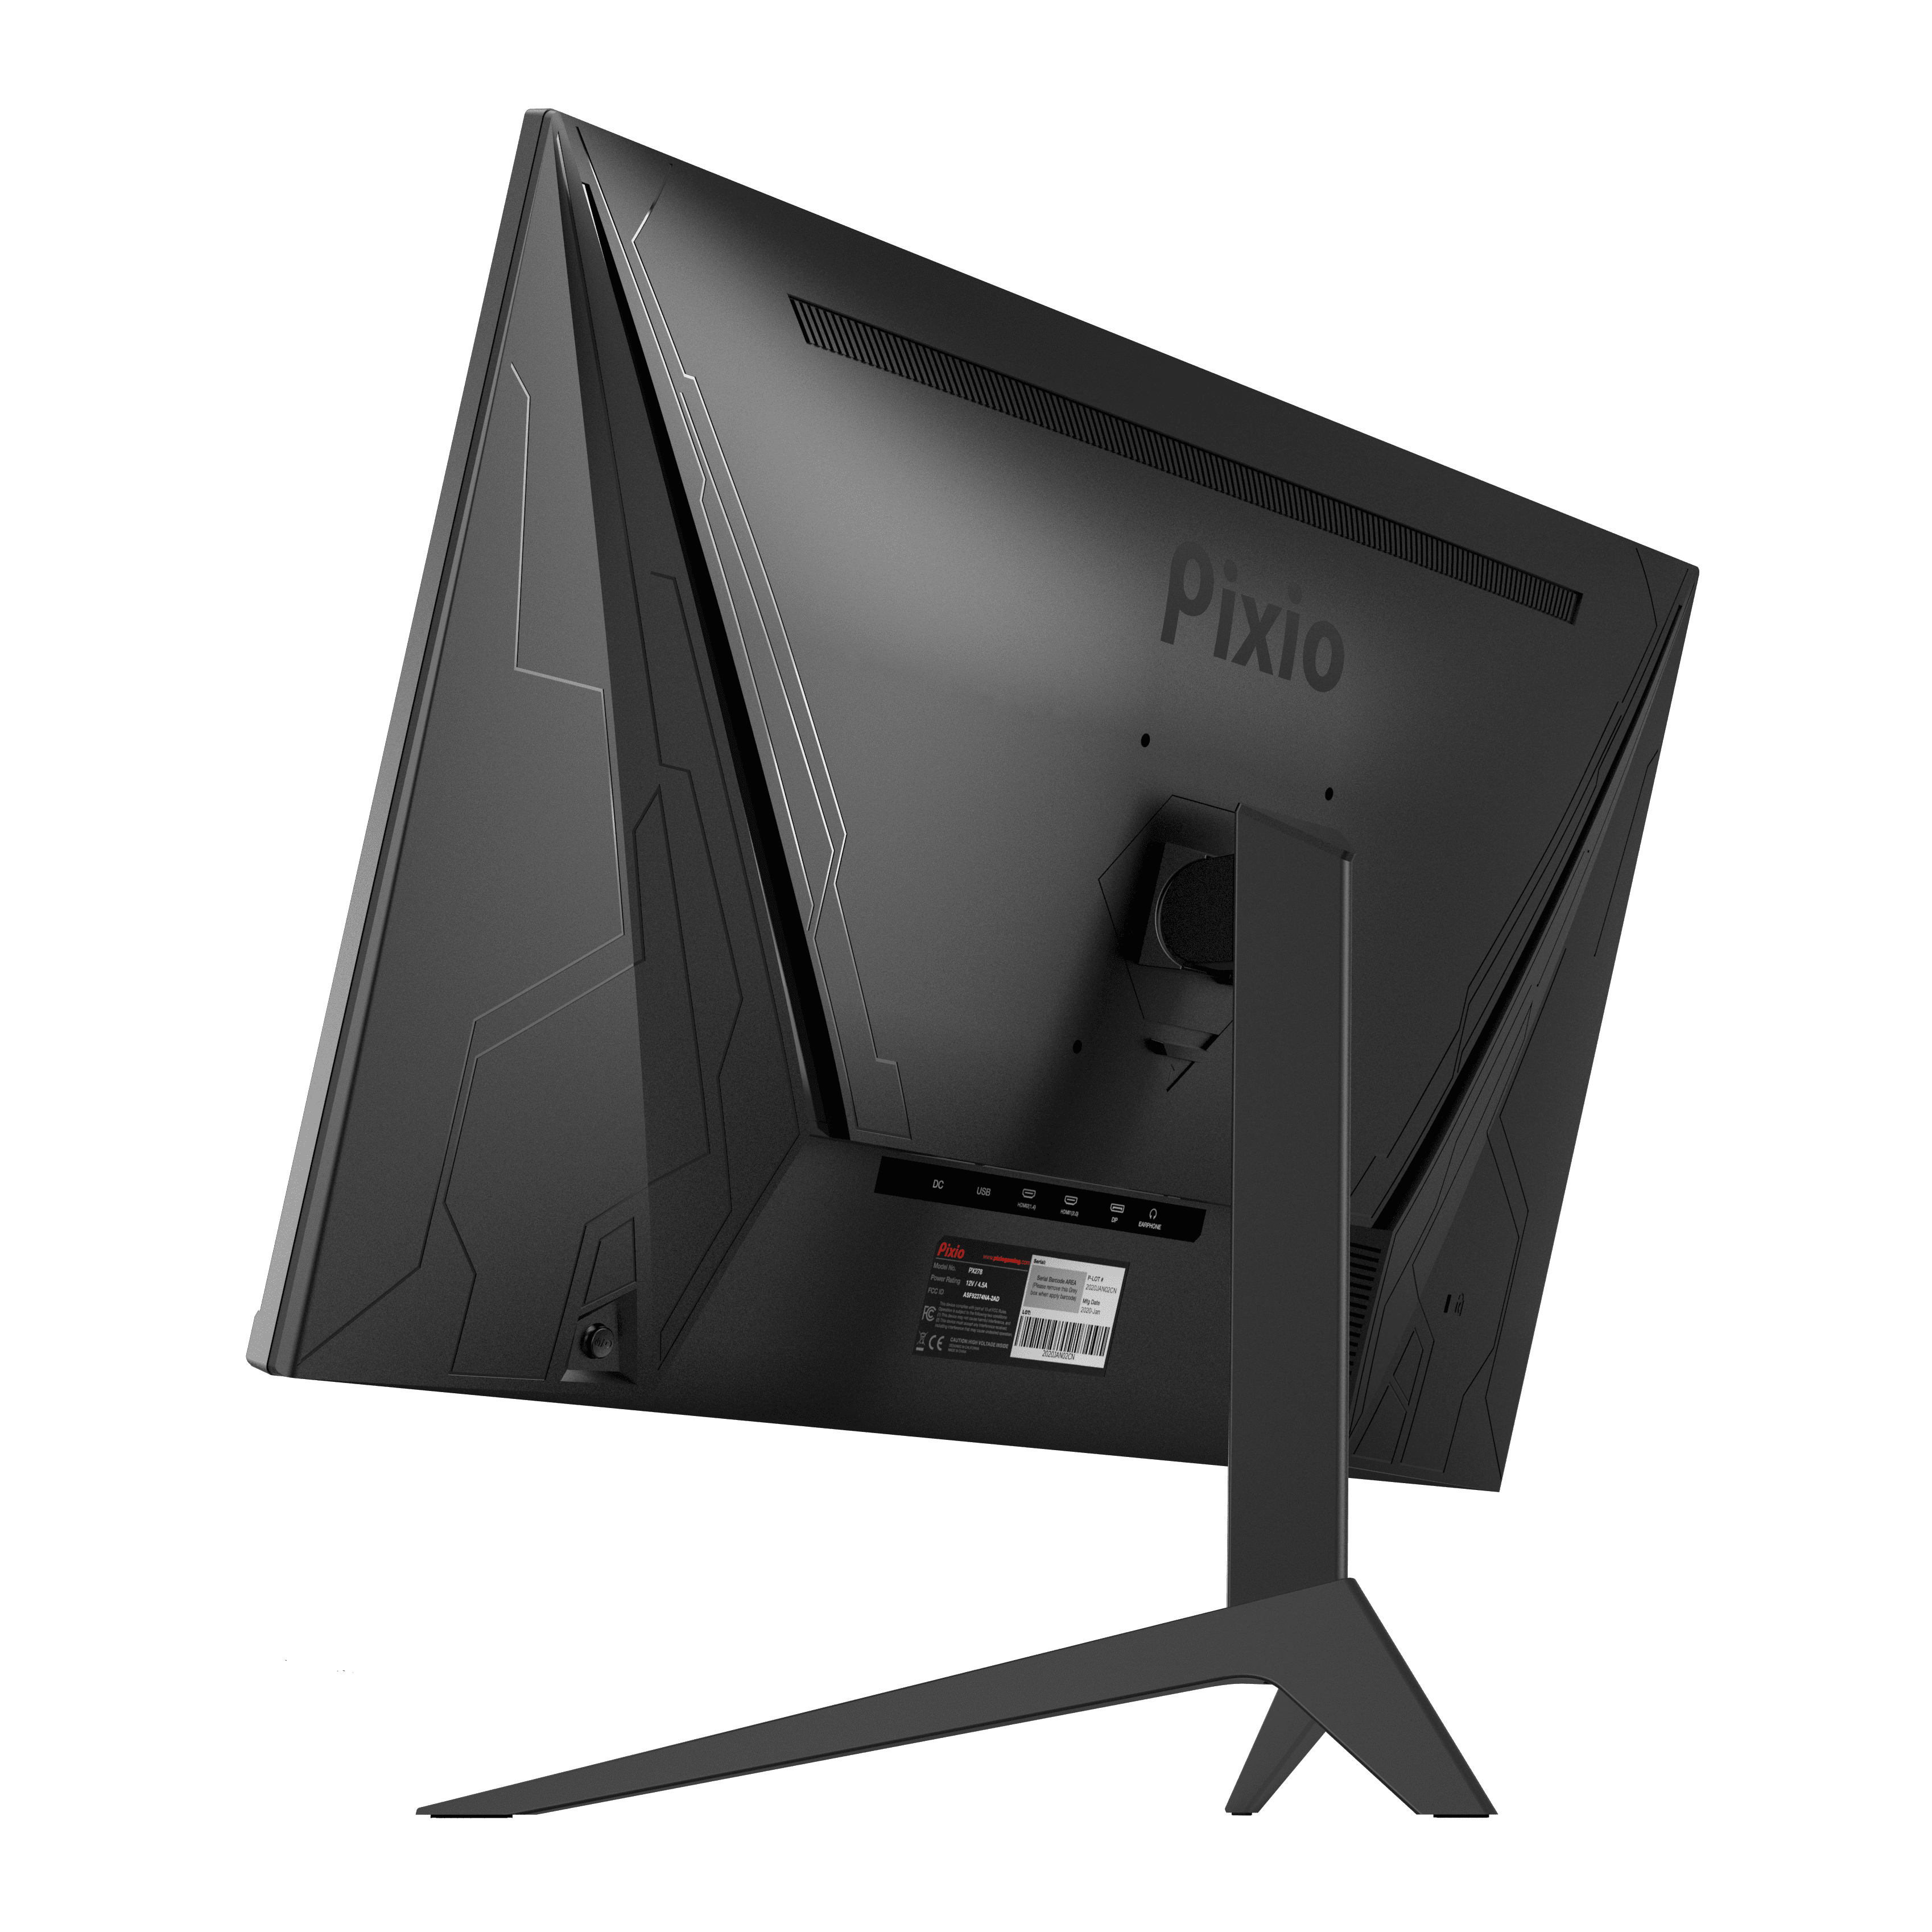 Pixio PX278 | 27 inch 1440p 144Hz 1ms (GTG) Gaming Monitor